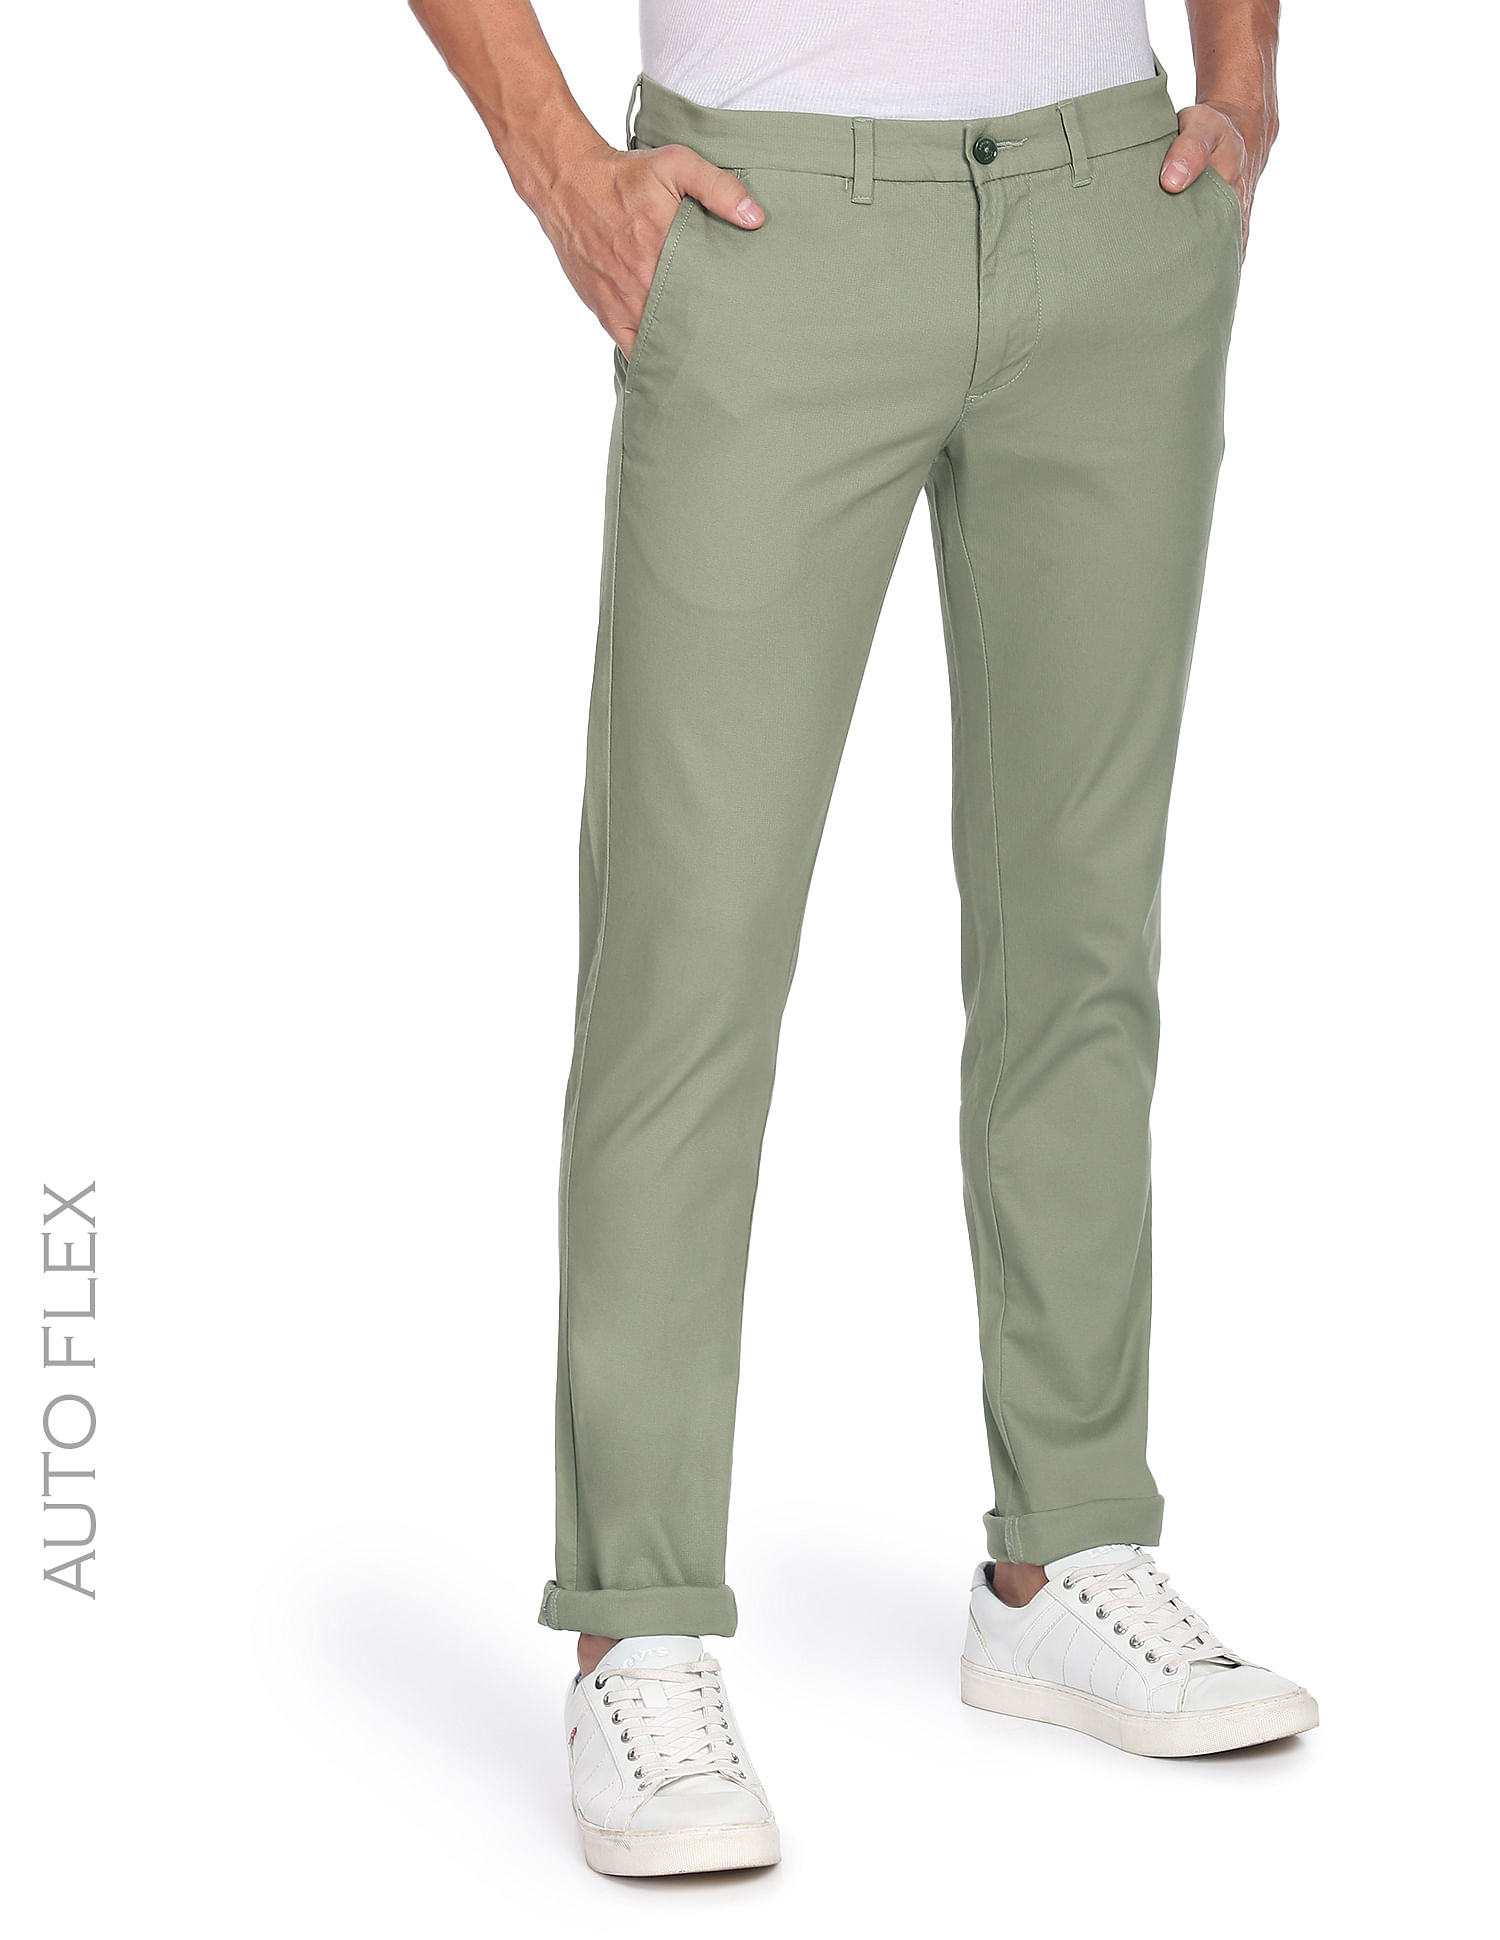 Buy ARROW Charcoal Mens Autoflex Waist Regular Fit Trousers  Shoppers Stop